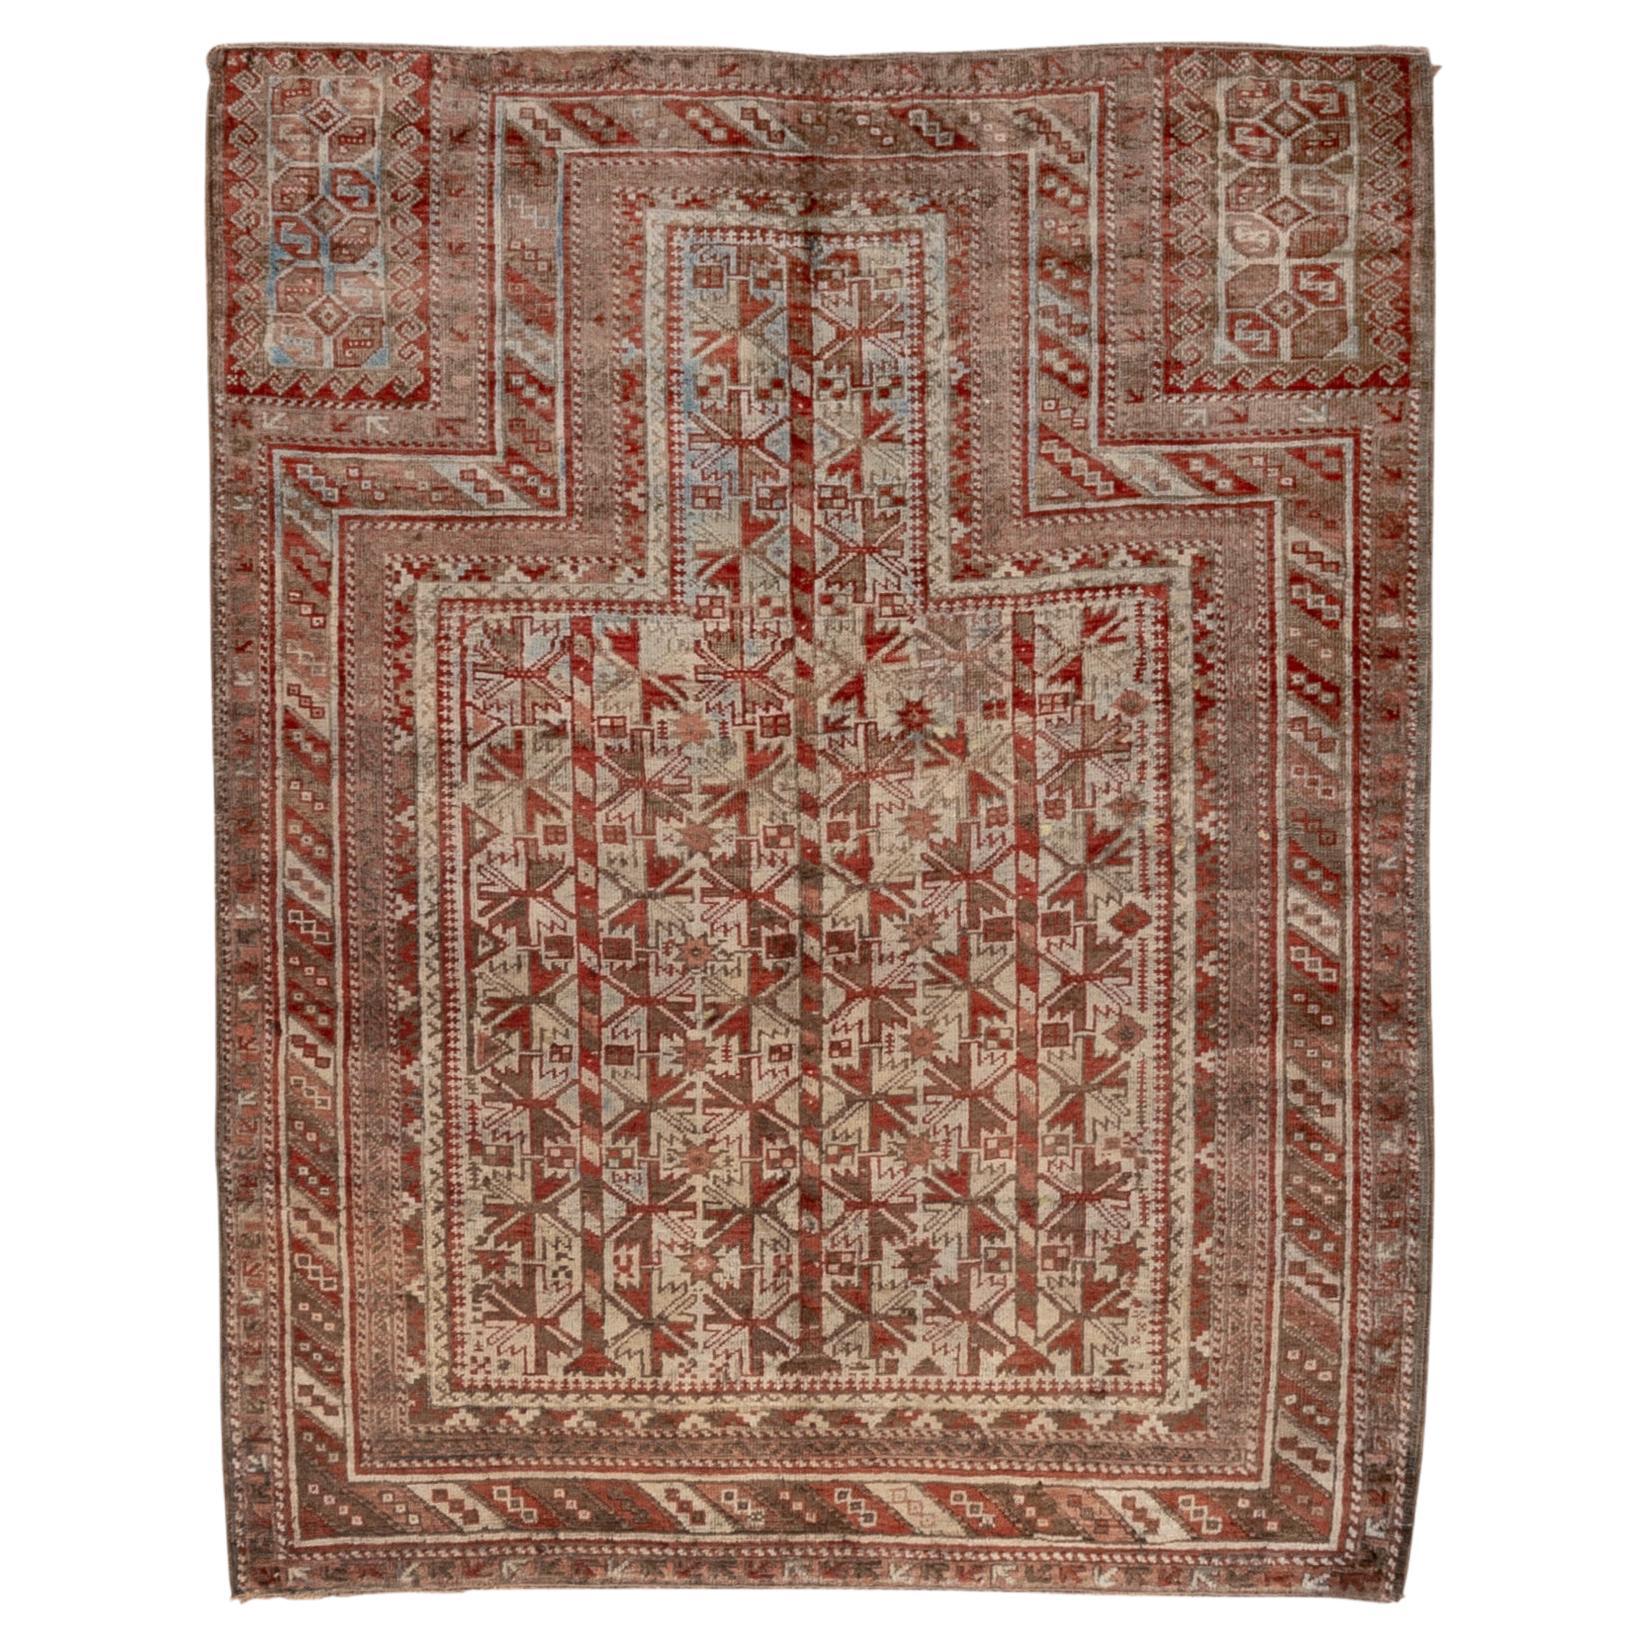 Beautiful Afghan Belouch Prayer Rug, Red, Seaform & Brown Tones, circa 1920s For Sale